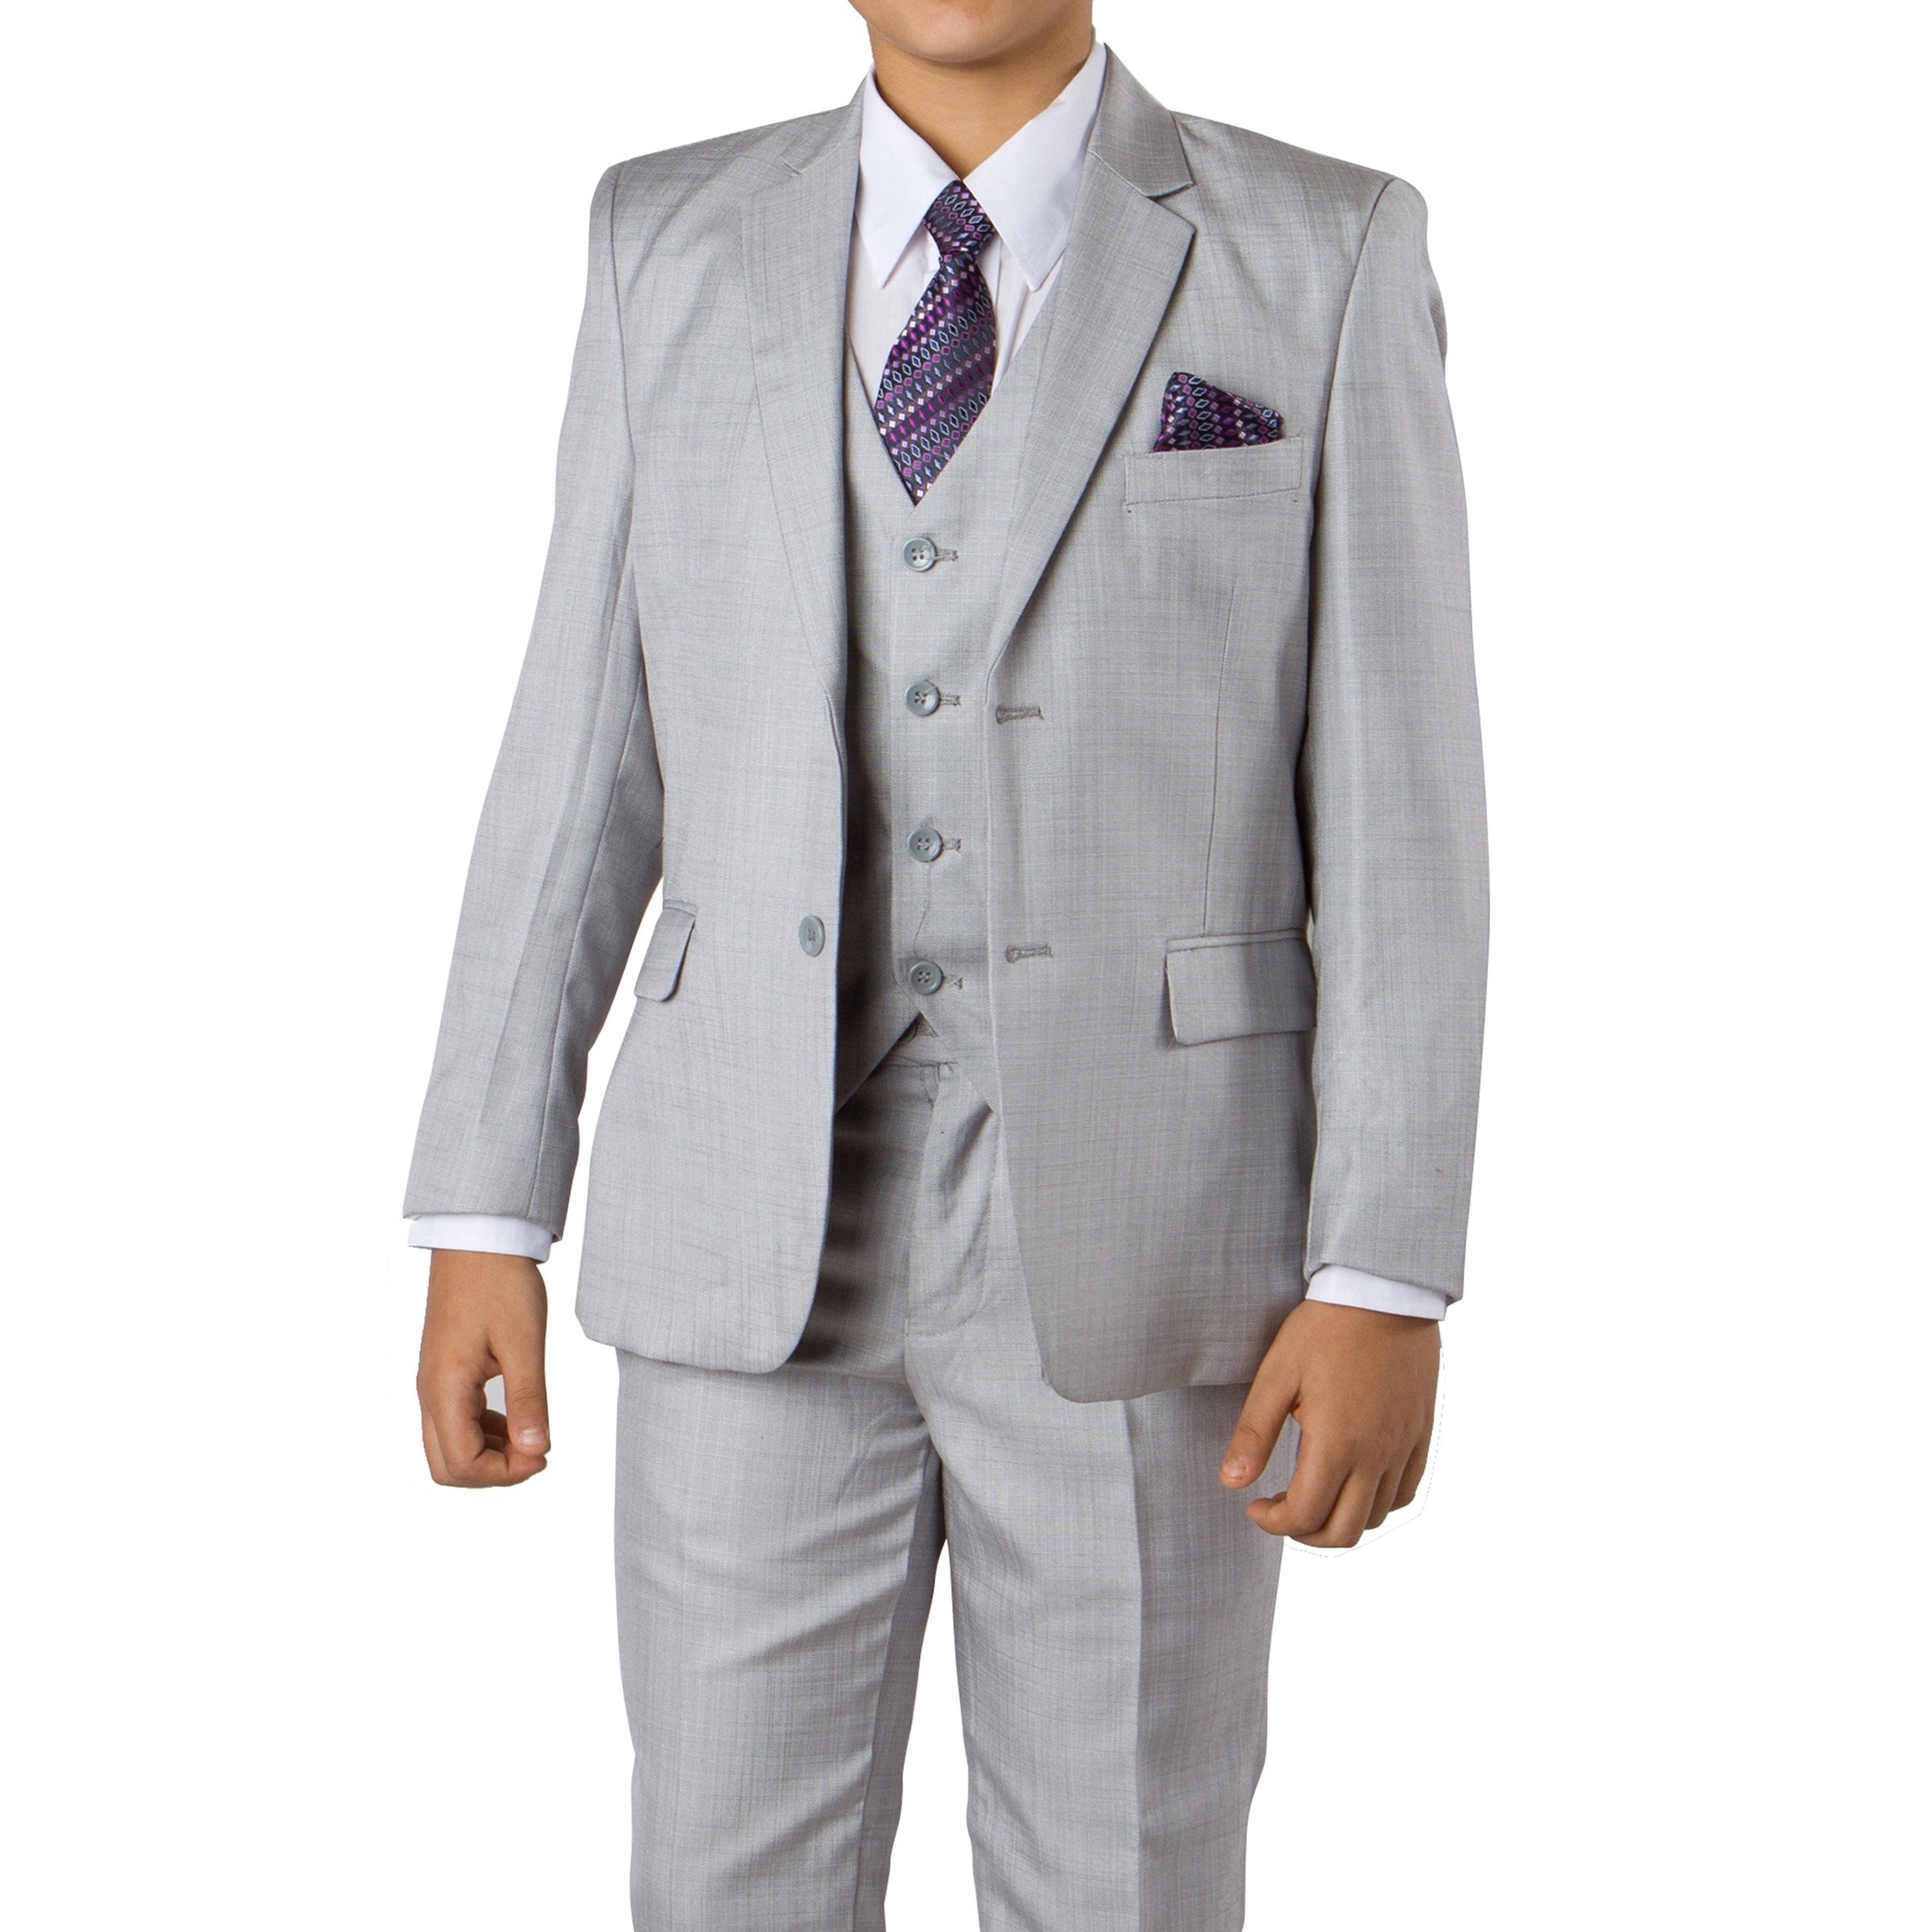 Boys-Suit-Light-Grey-Sharkskin-6-Pieces-Classic-Fit-Suits-54285dae-289c-430a-9d60-04eca7e4d6aa.jpg  by ProkChamp06